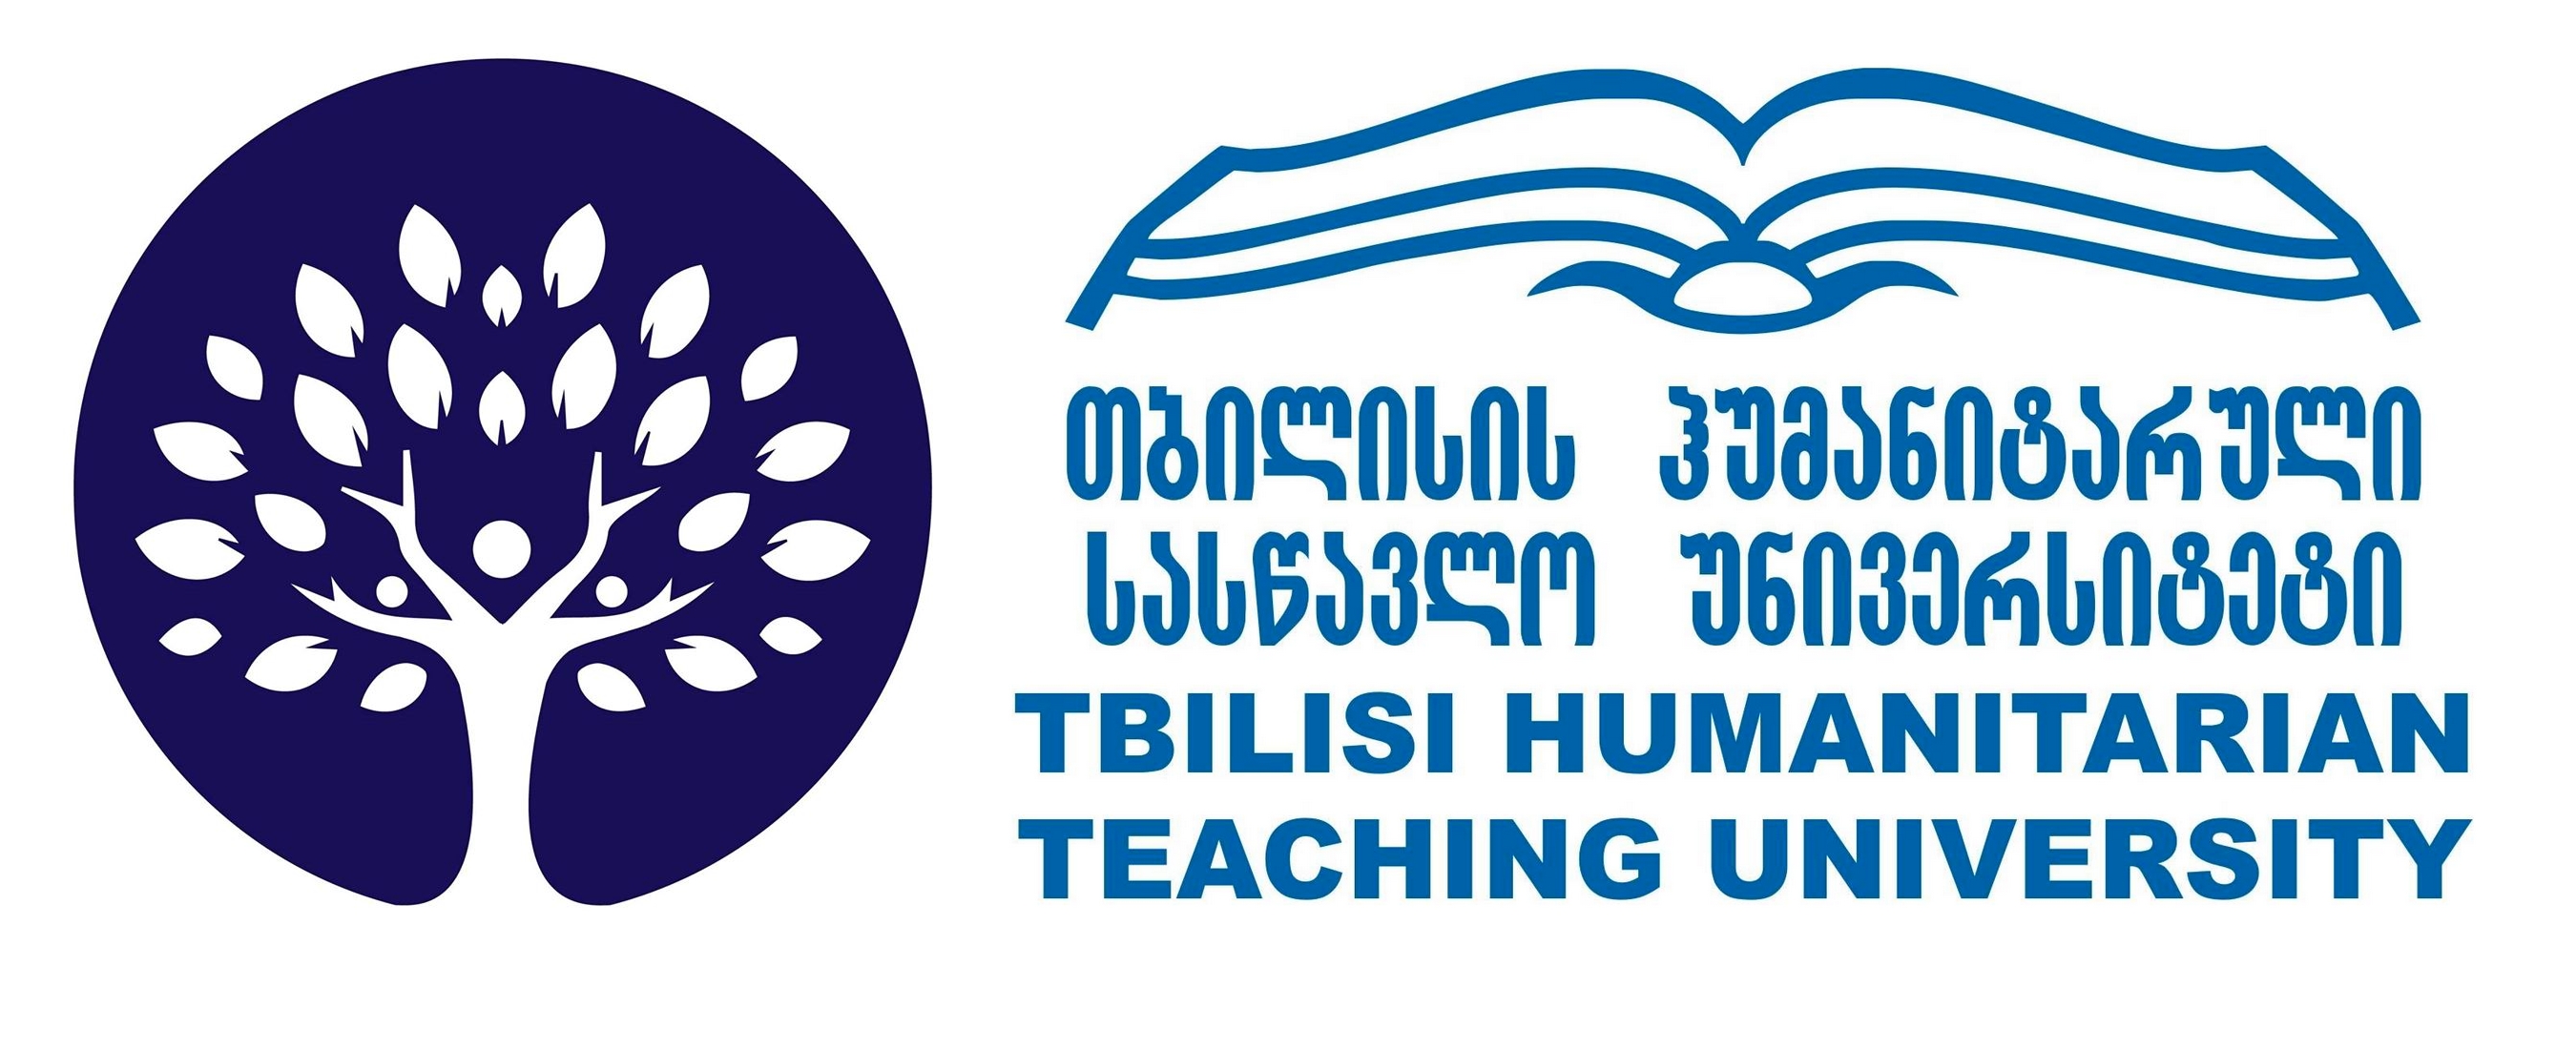 Memorandum of Understanding was signed between Tbilisi Humanitarian Teaching University and Career Development Center